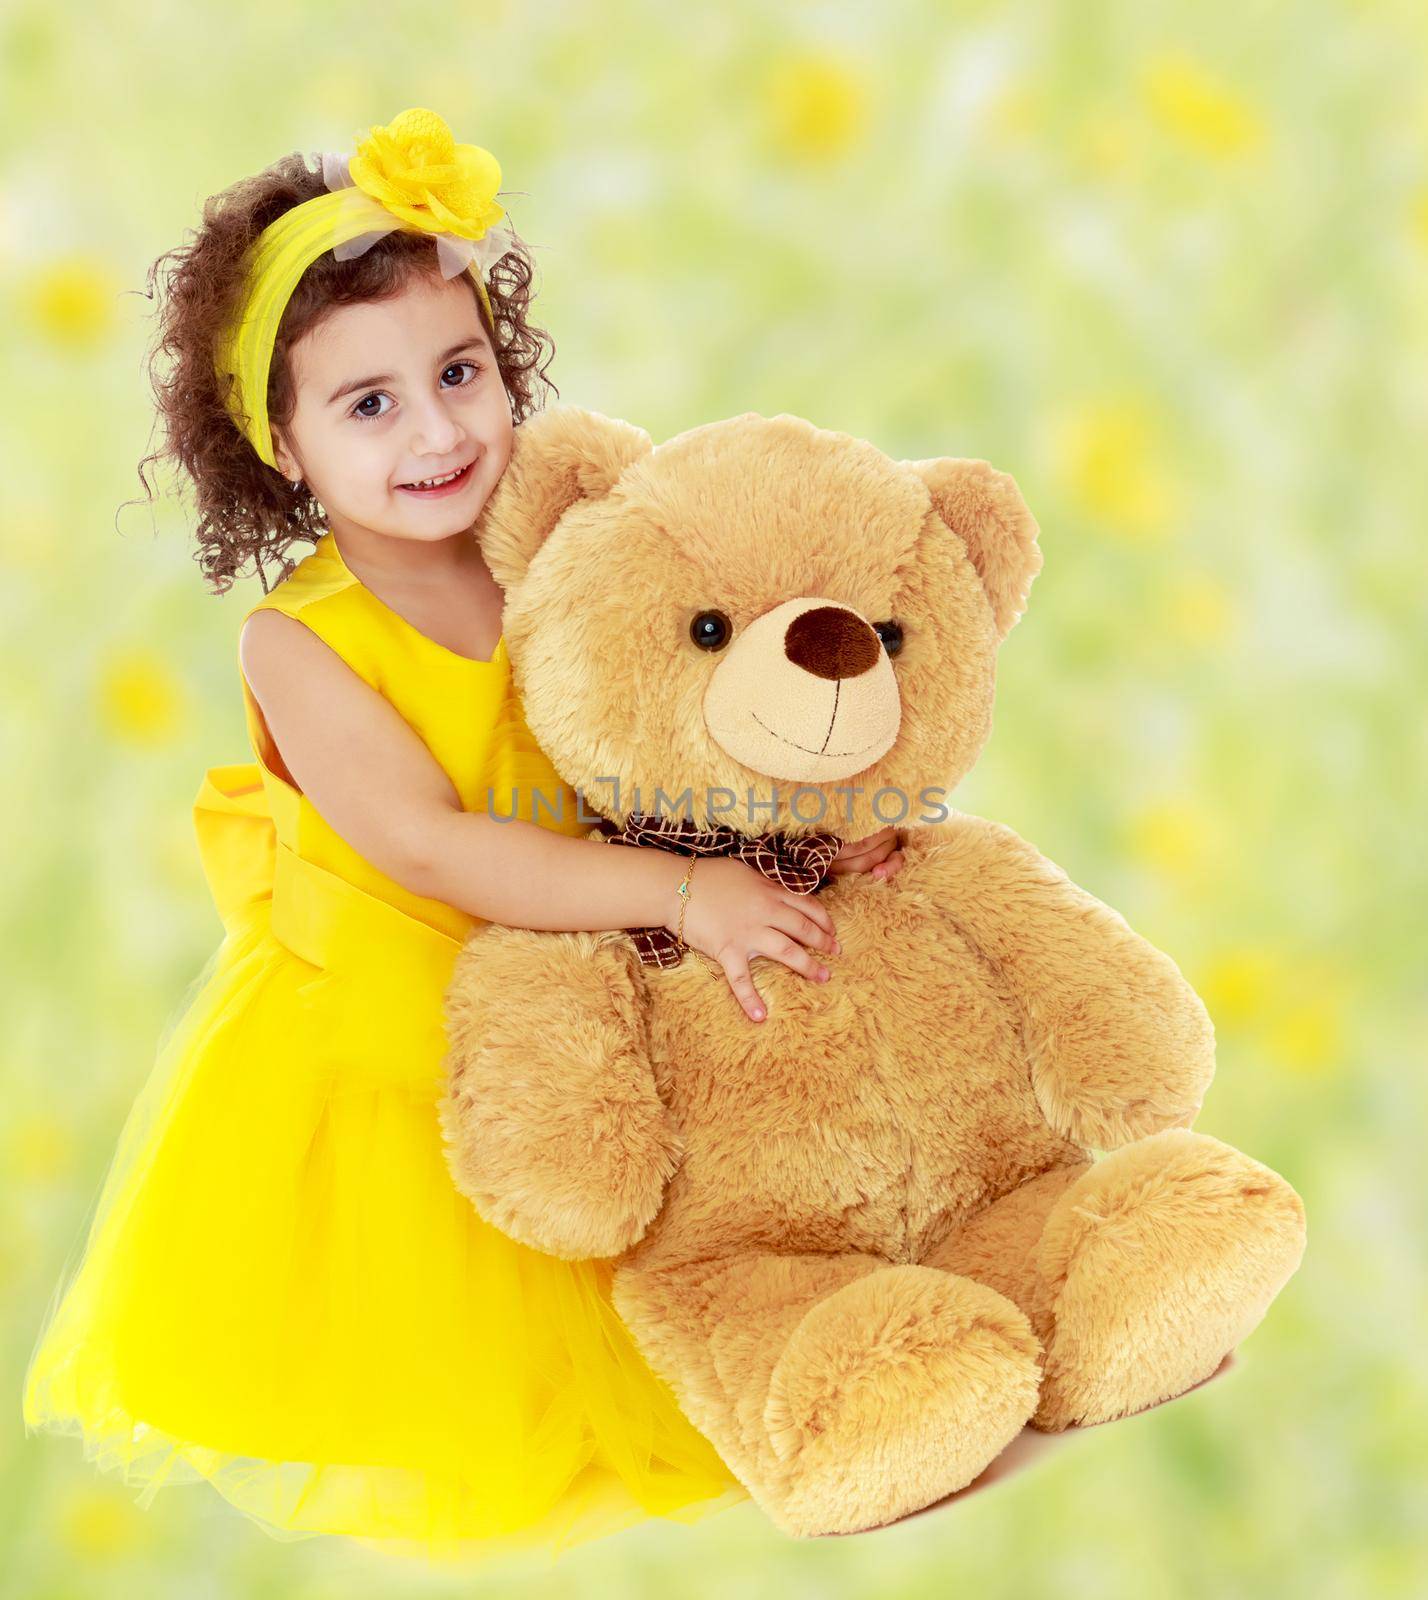 Little girl hugging Teddy bear by kolesnikov_studio